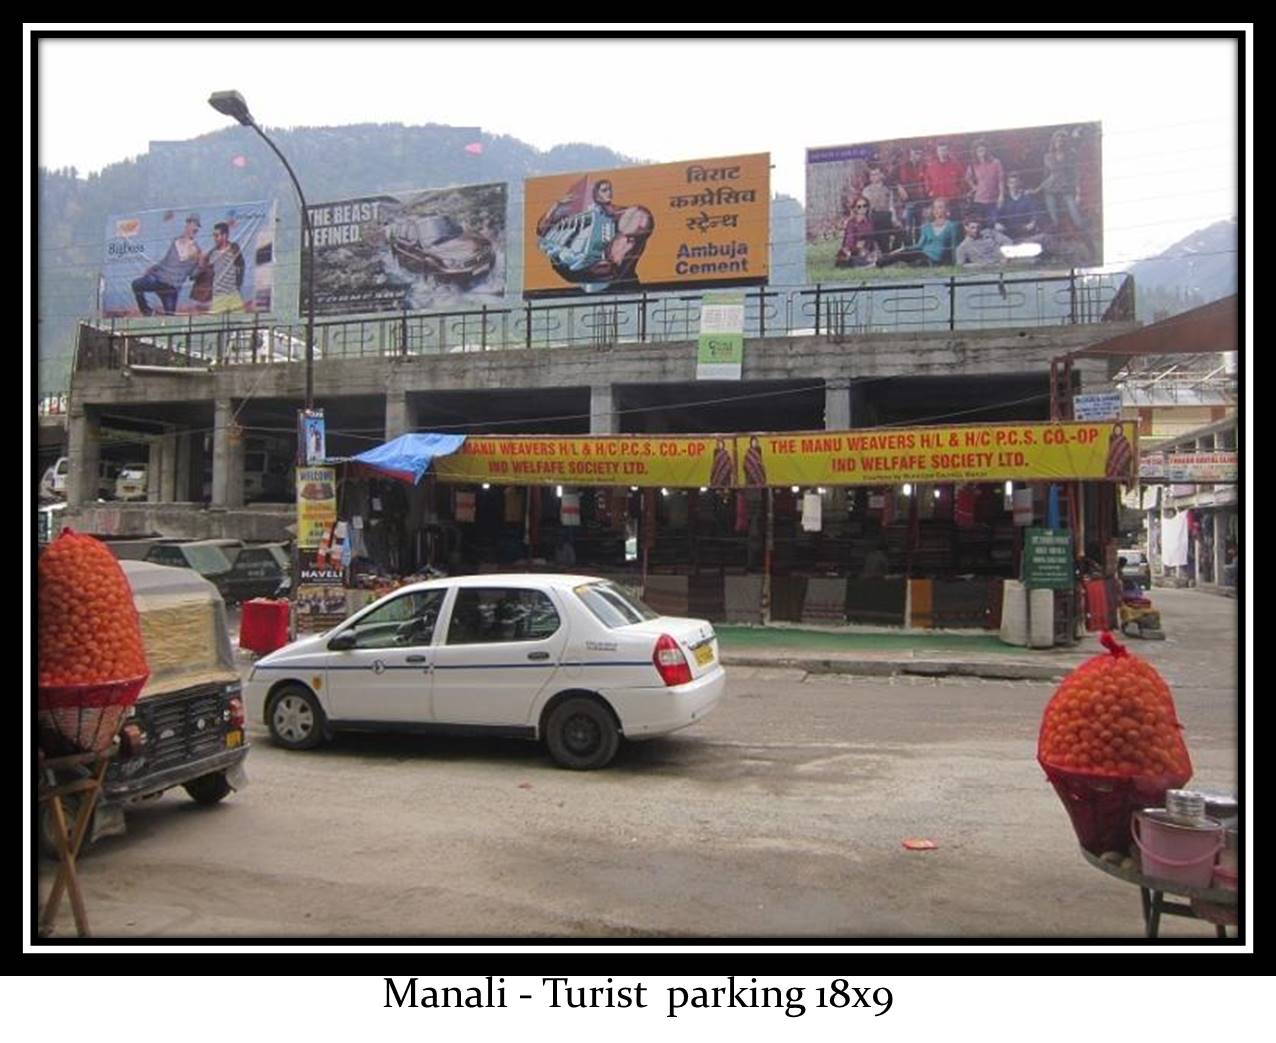 Turiest parking, Manali